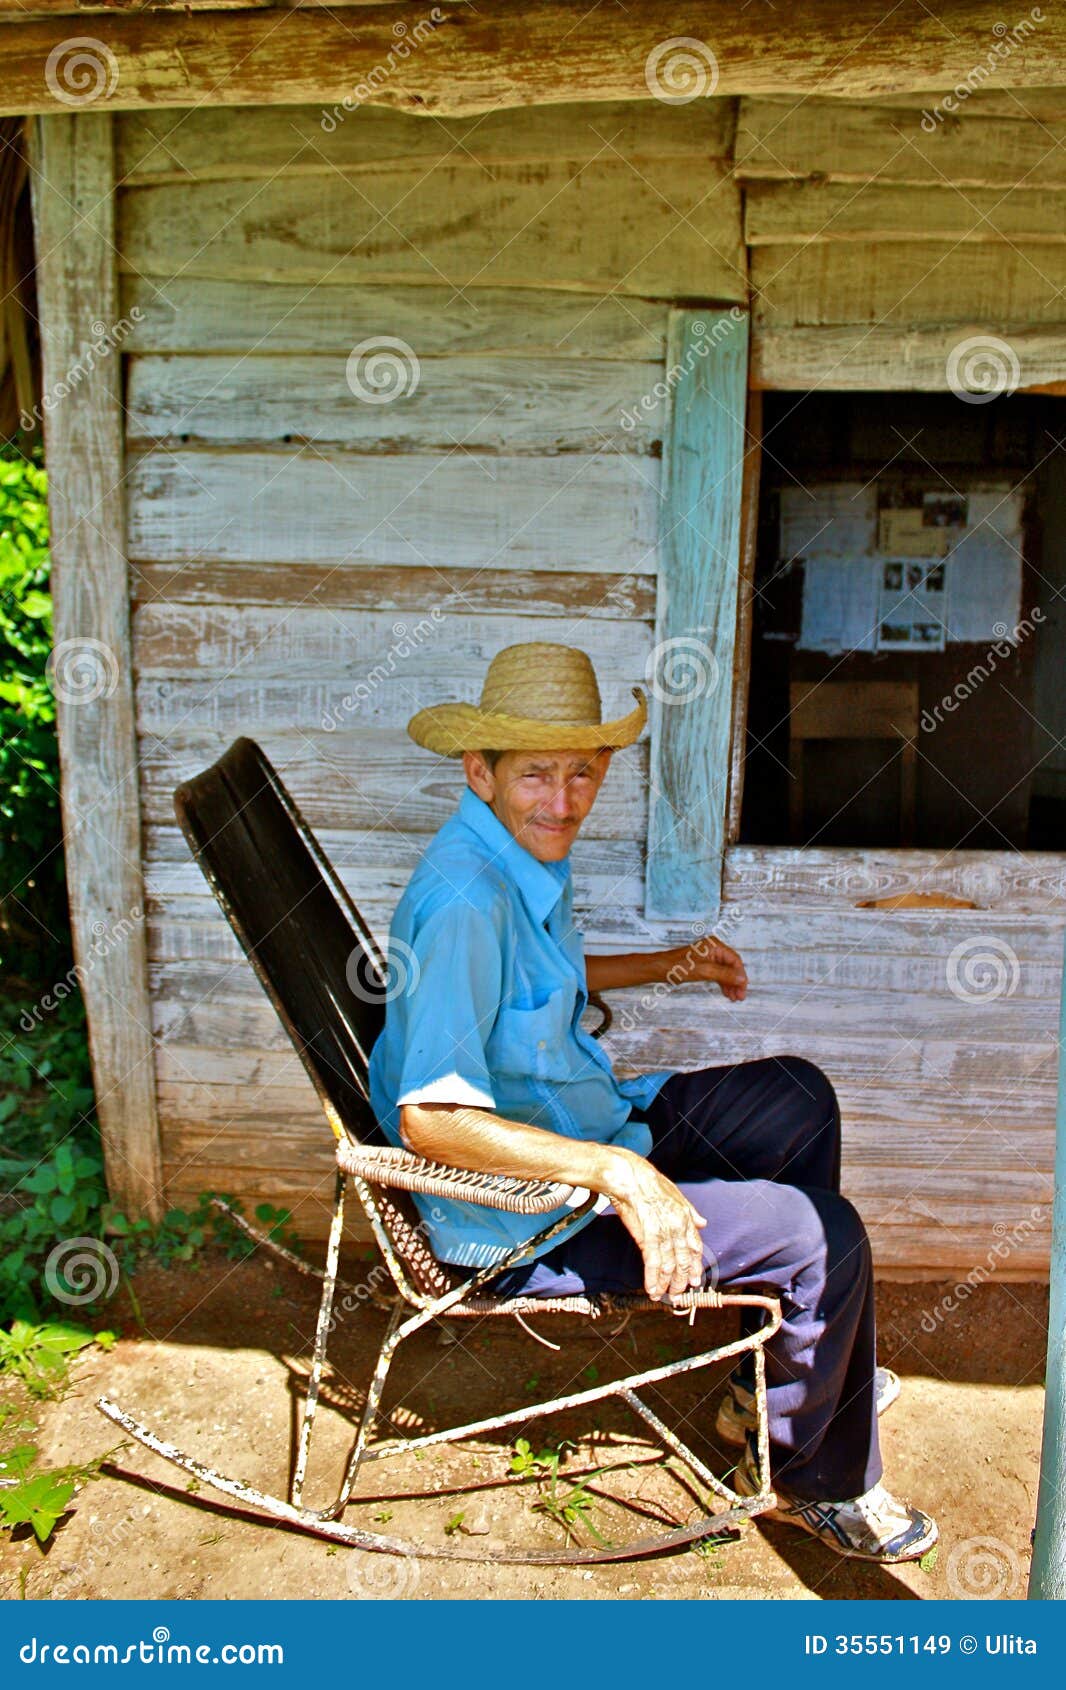 Cuban Farmer In Rocking Chair Editorial Stock Image 